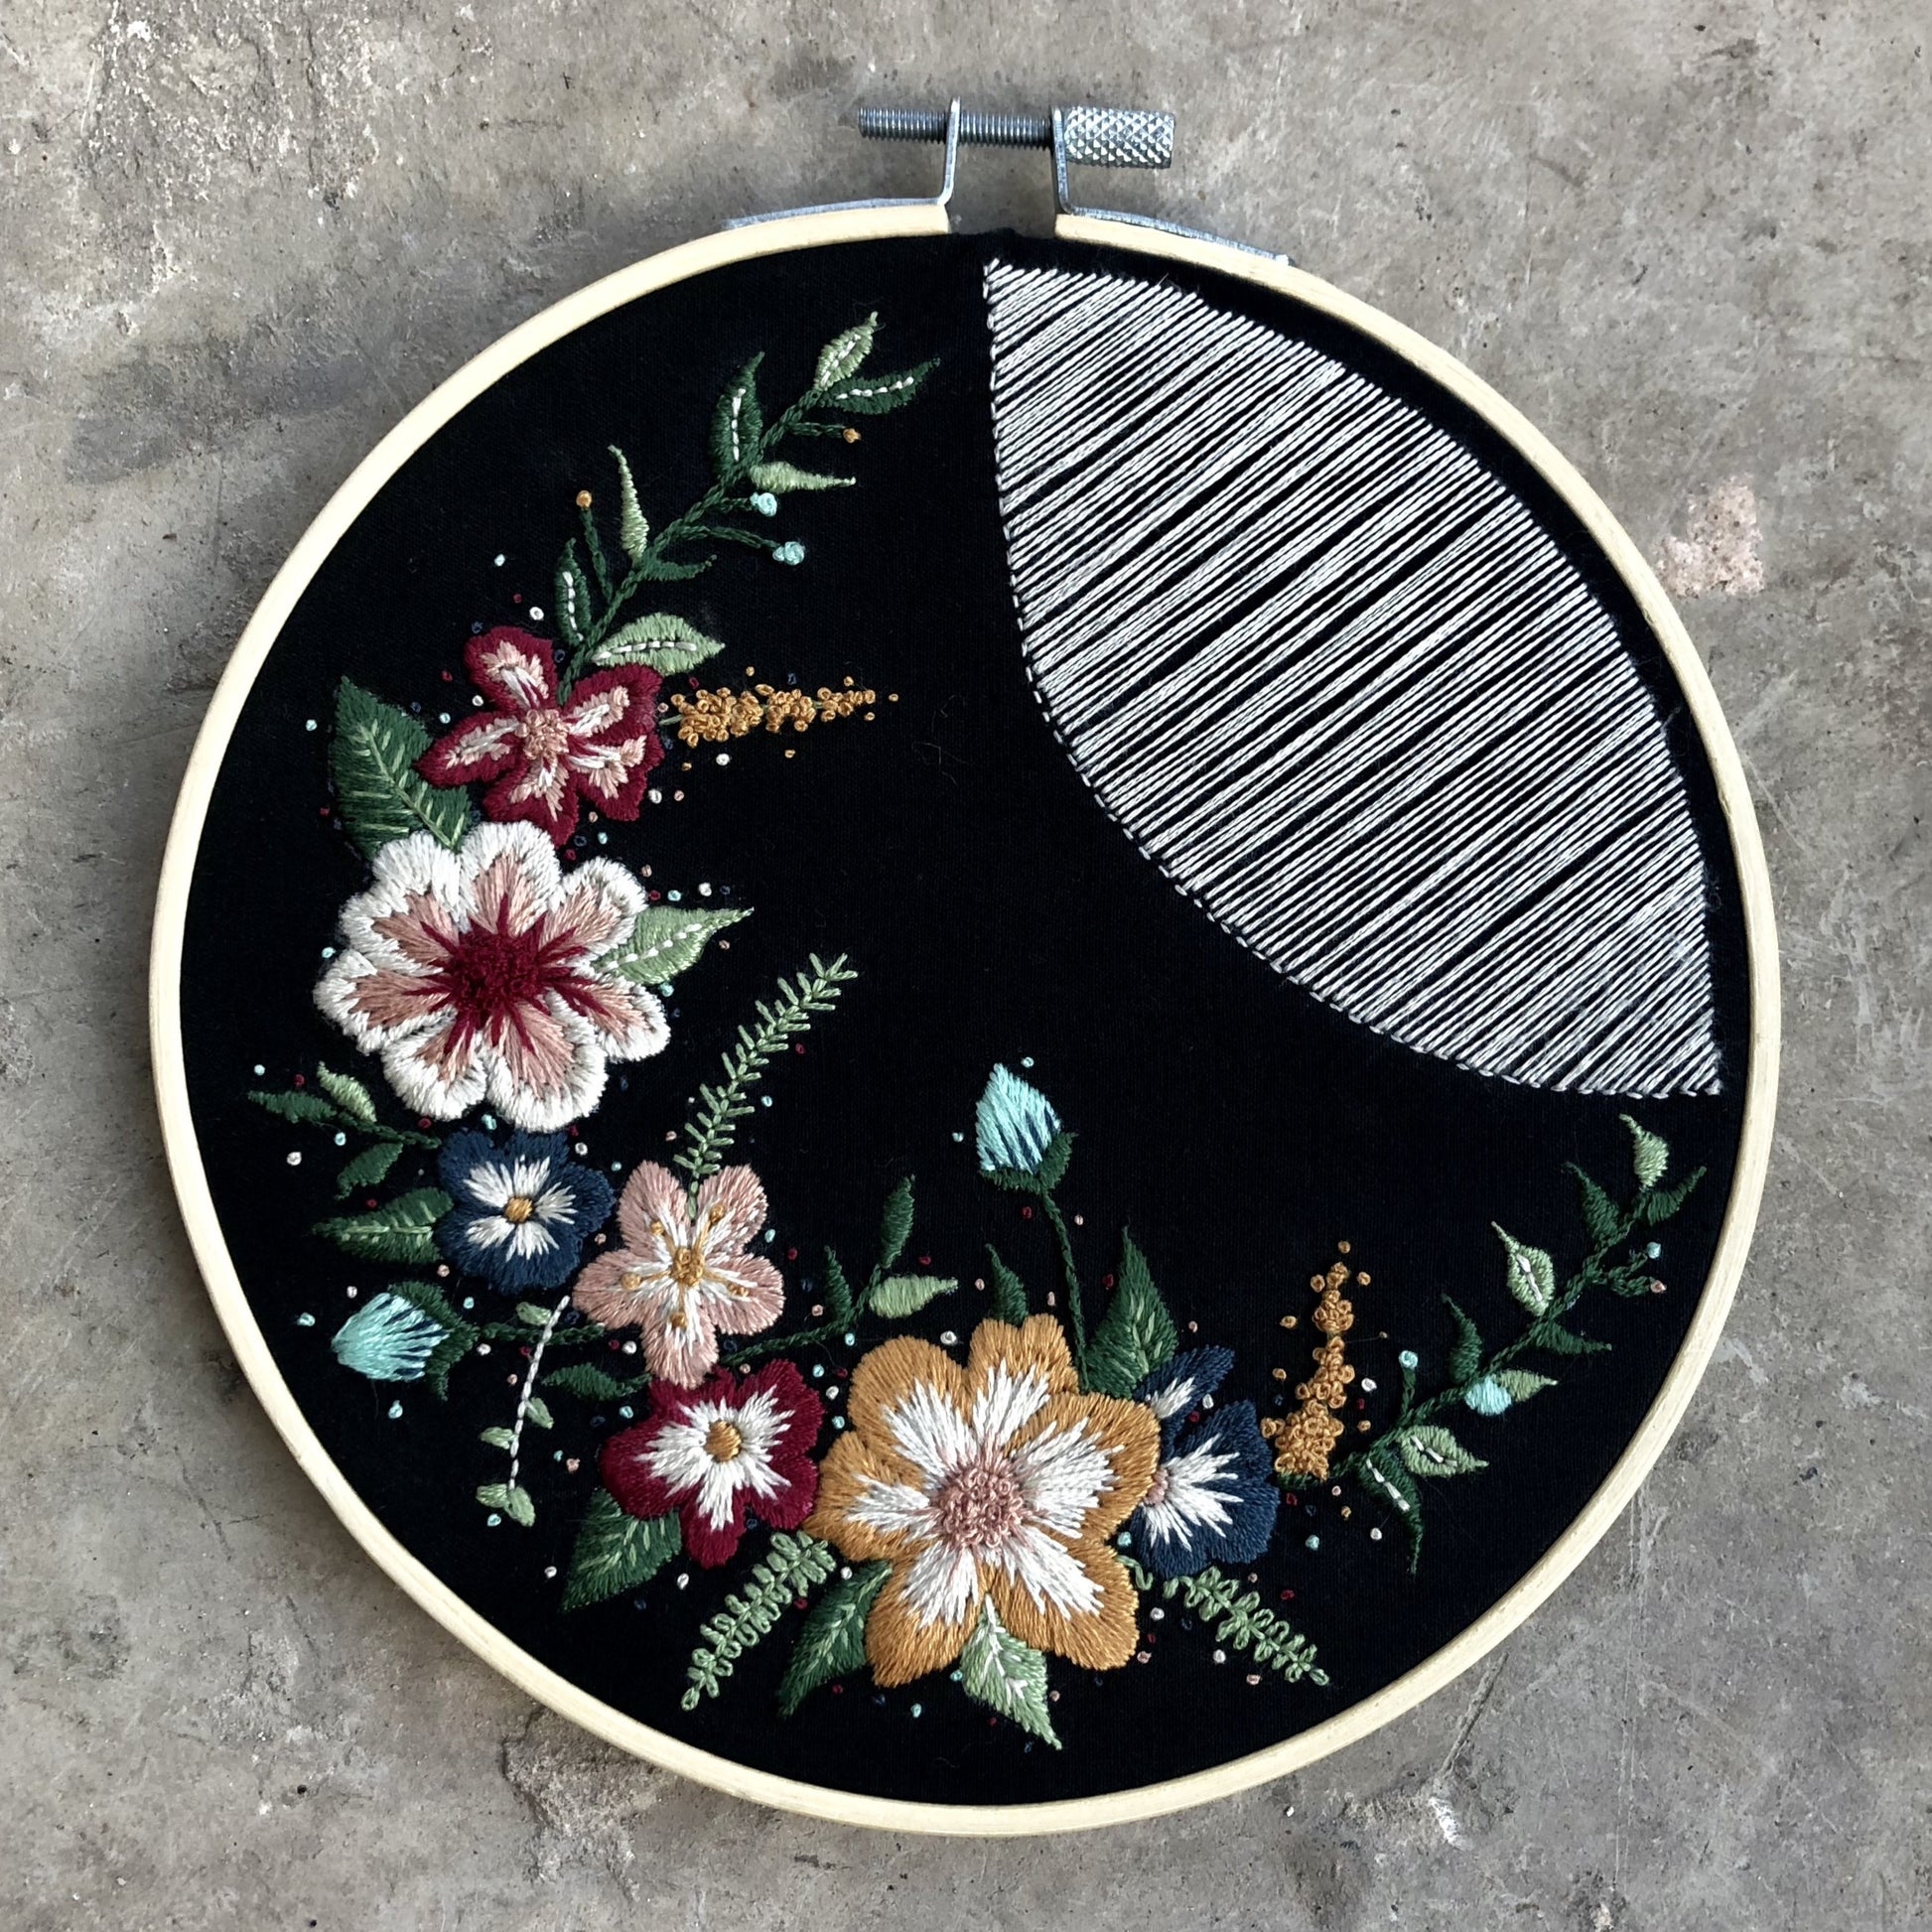 Floral embroidery hoop art